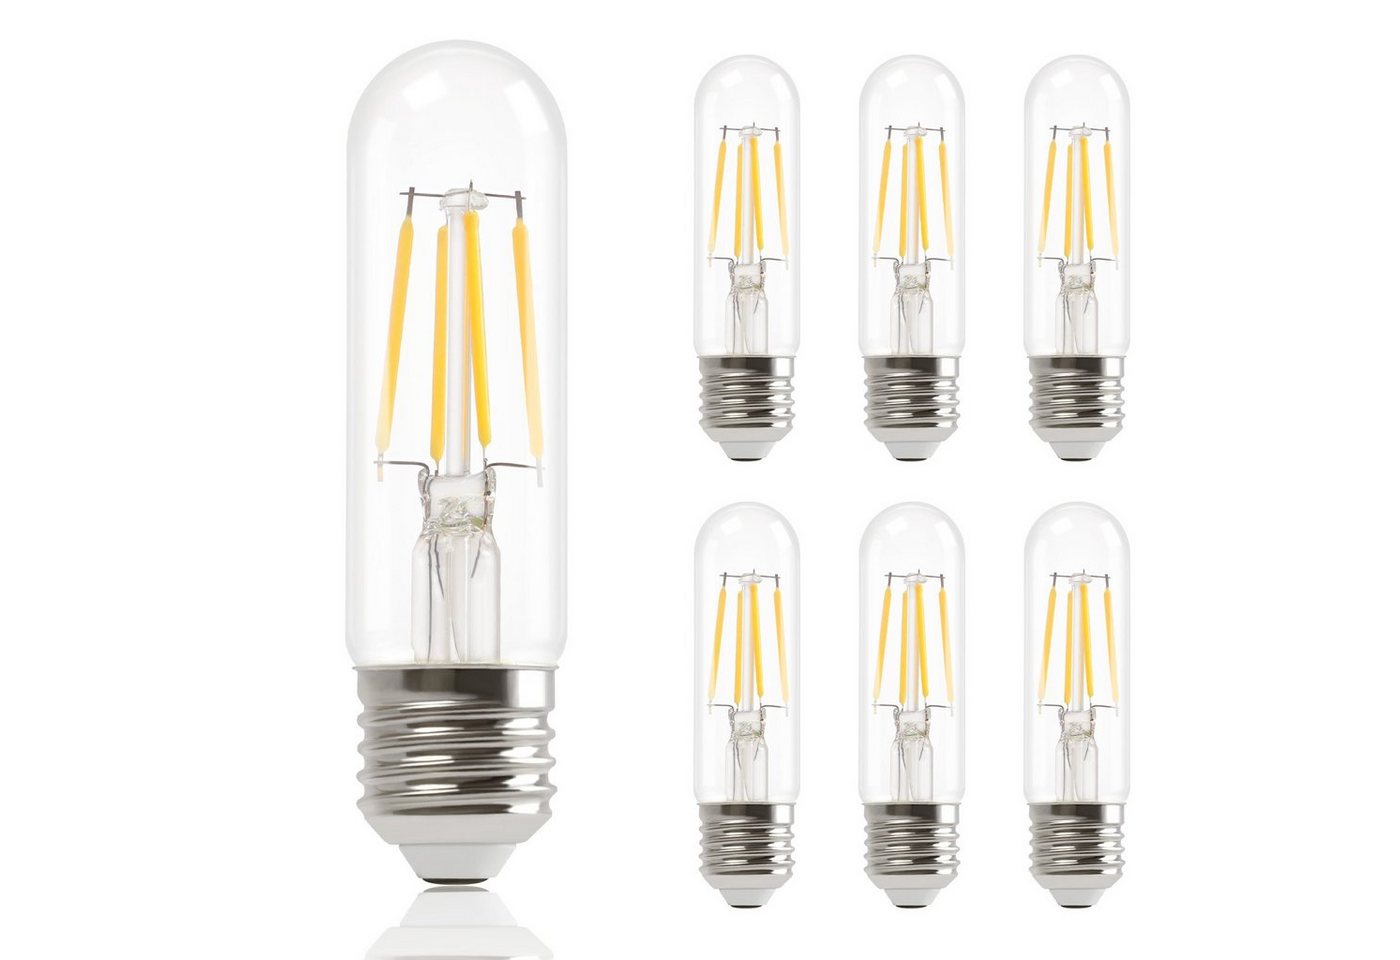 Nettlife LED-Leuchtmittel E27 LED Warmweiss Glühbirnen Vintage T30 Lampe E27 Birnen 4W 2700K, E27, 6 St., Warmweiss von Nettlife